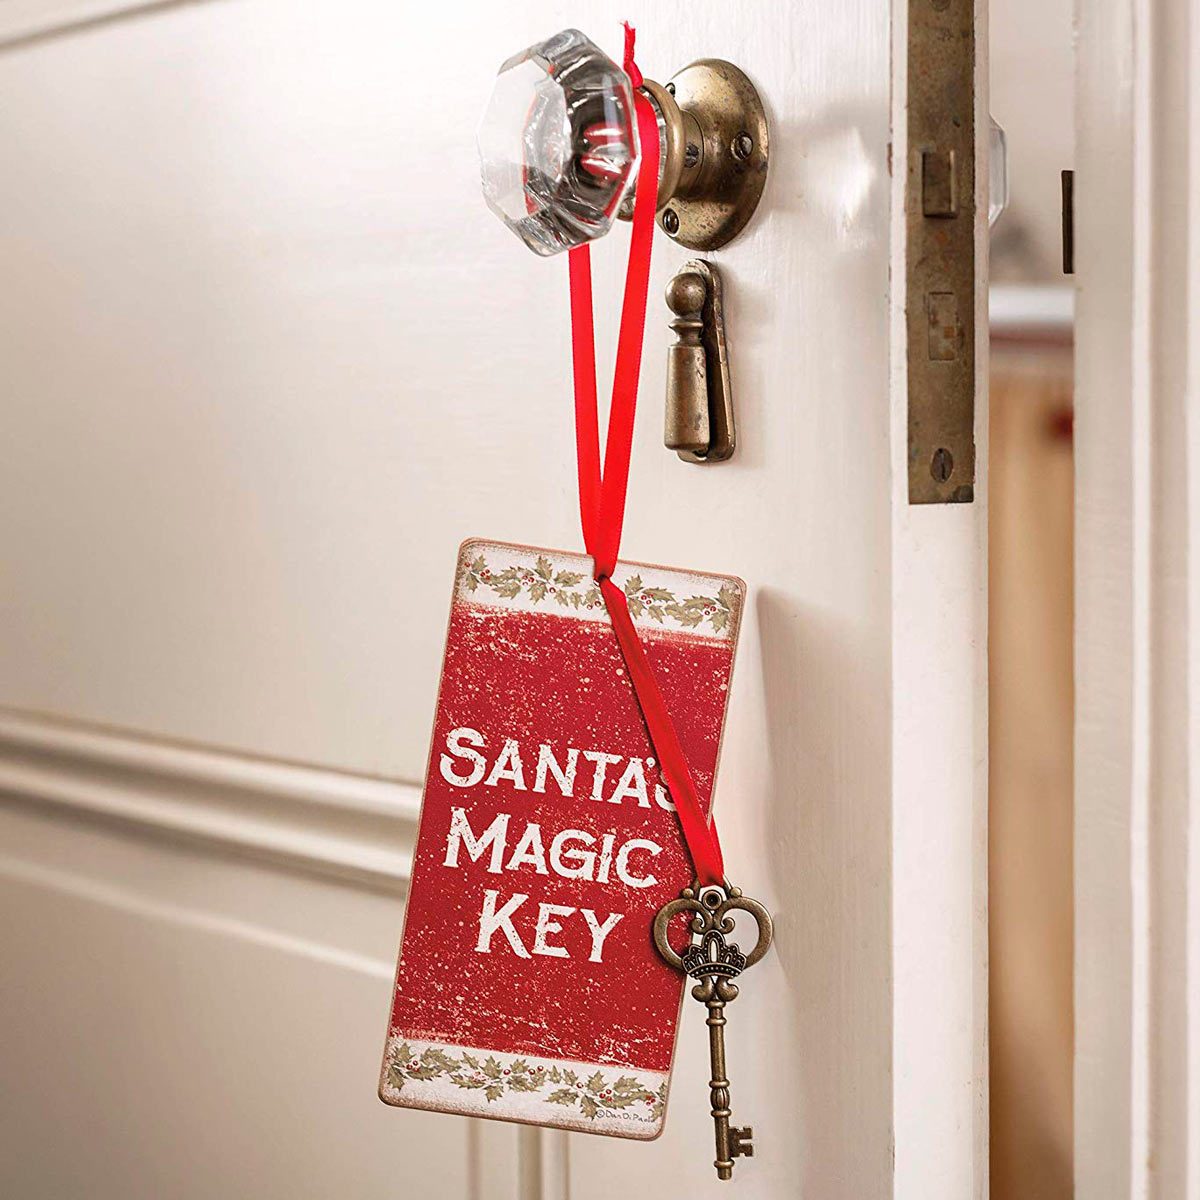 Santa Key for Home with No Chimney / Christmas Santa Key - Tart Design Co